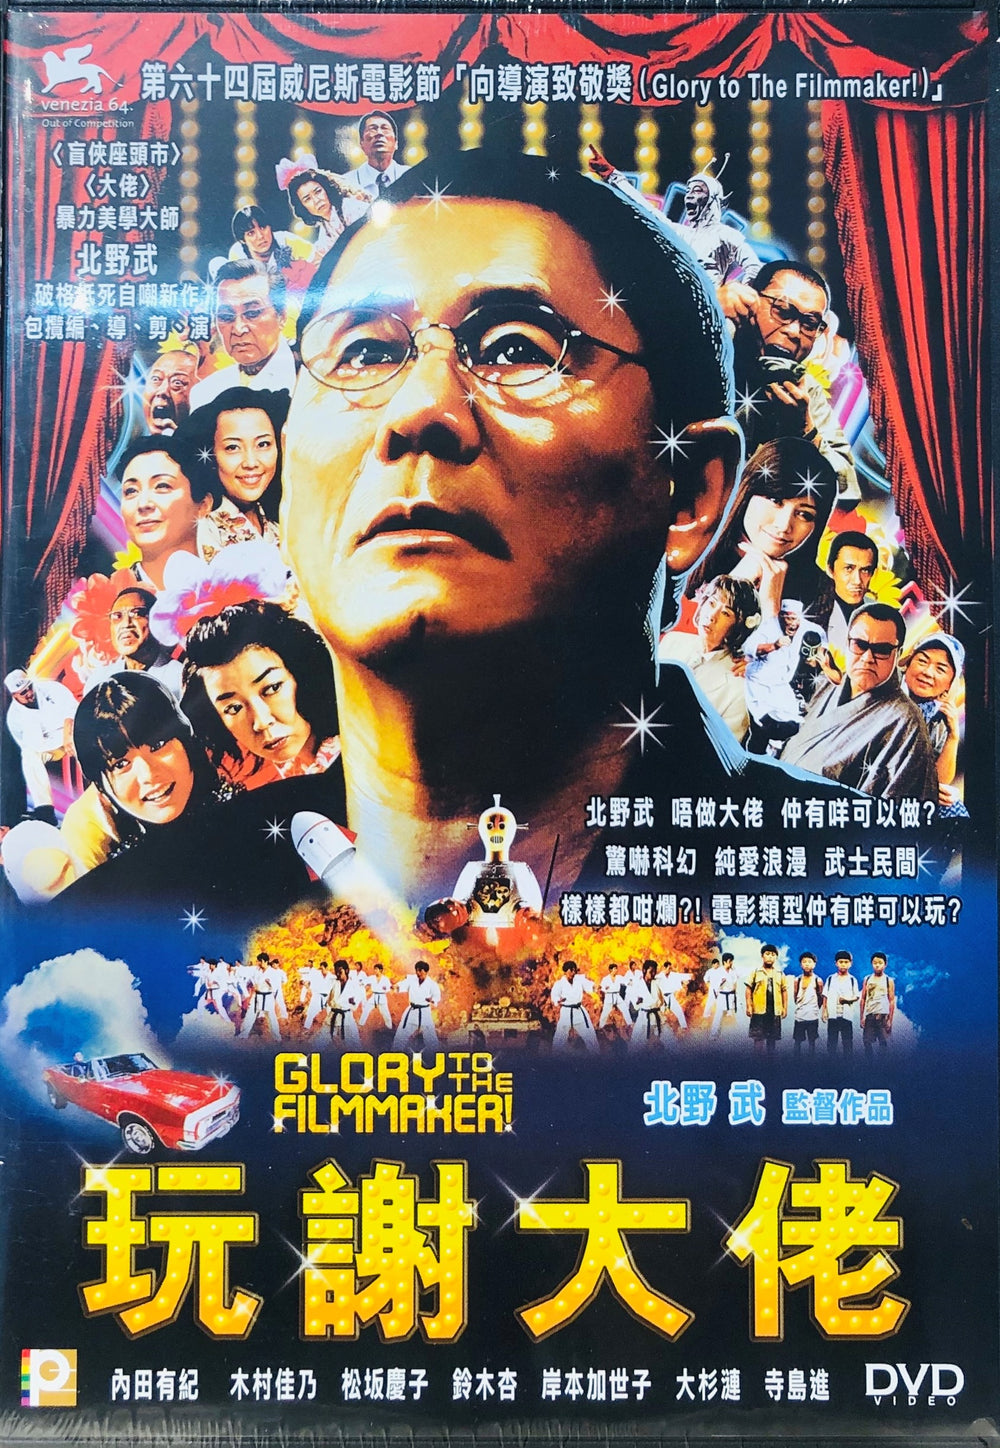 GLORY TO THE FILMMAKER 玩謝大佬 2009 (JAPANESE MOVIE) DVD ENGLISH SUBTITLES (REGION 3)